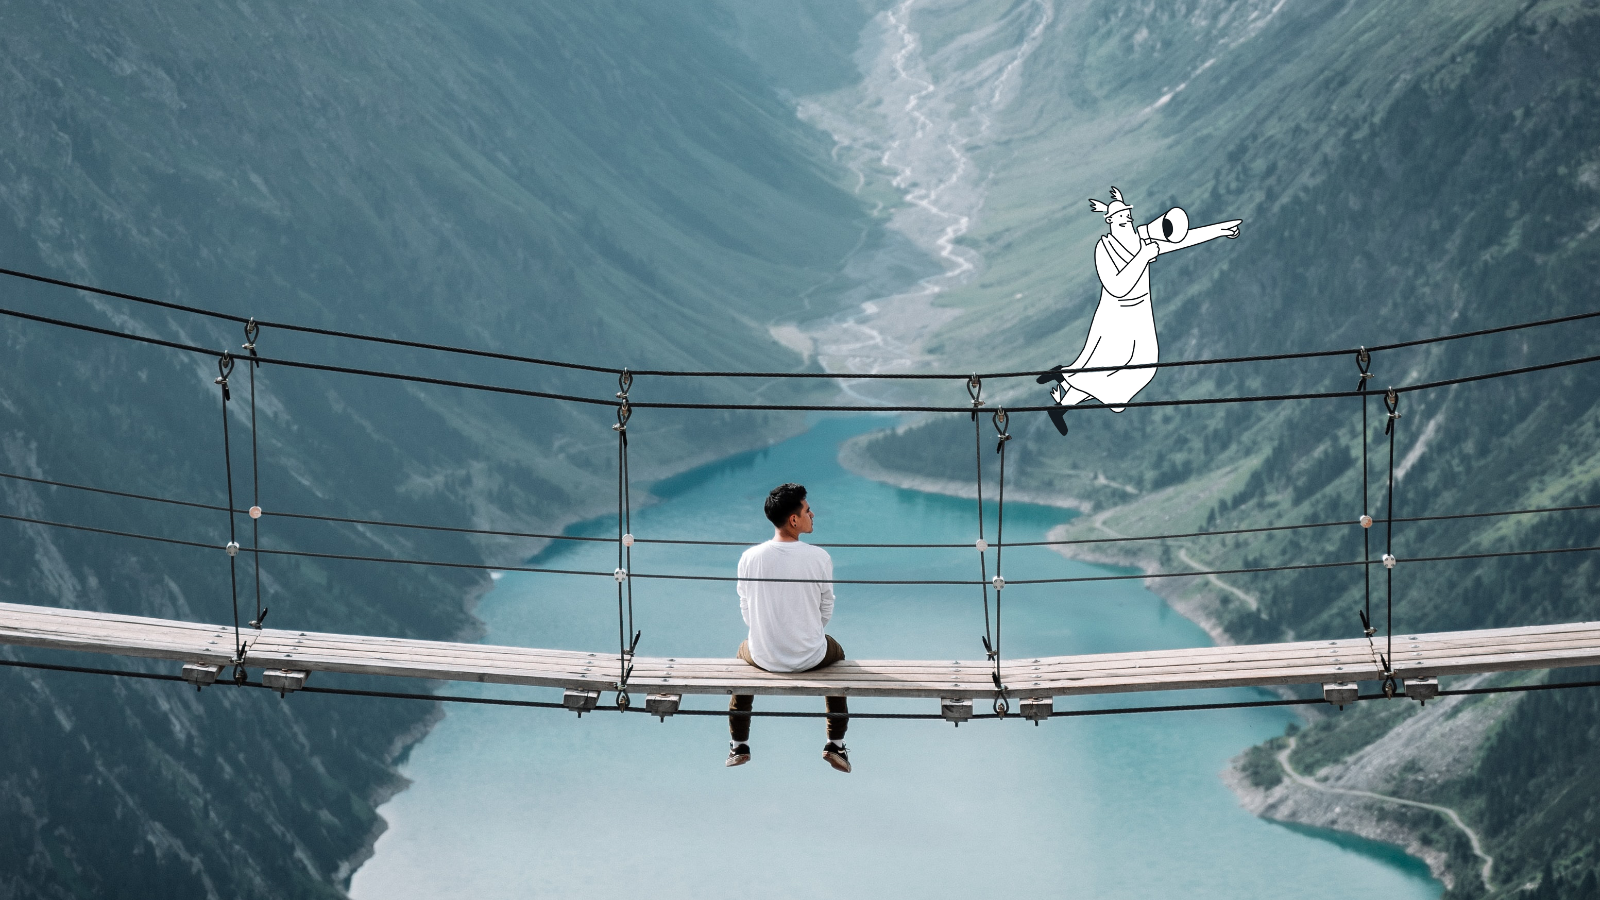 Man sits on suspension bridge near mountains. Illustraton points to inbox insights